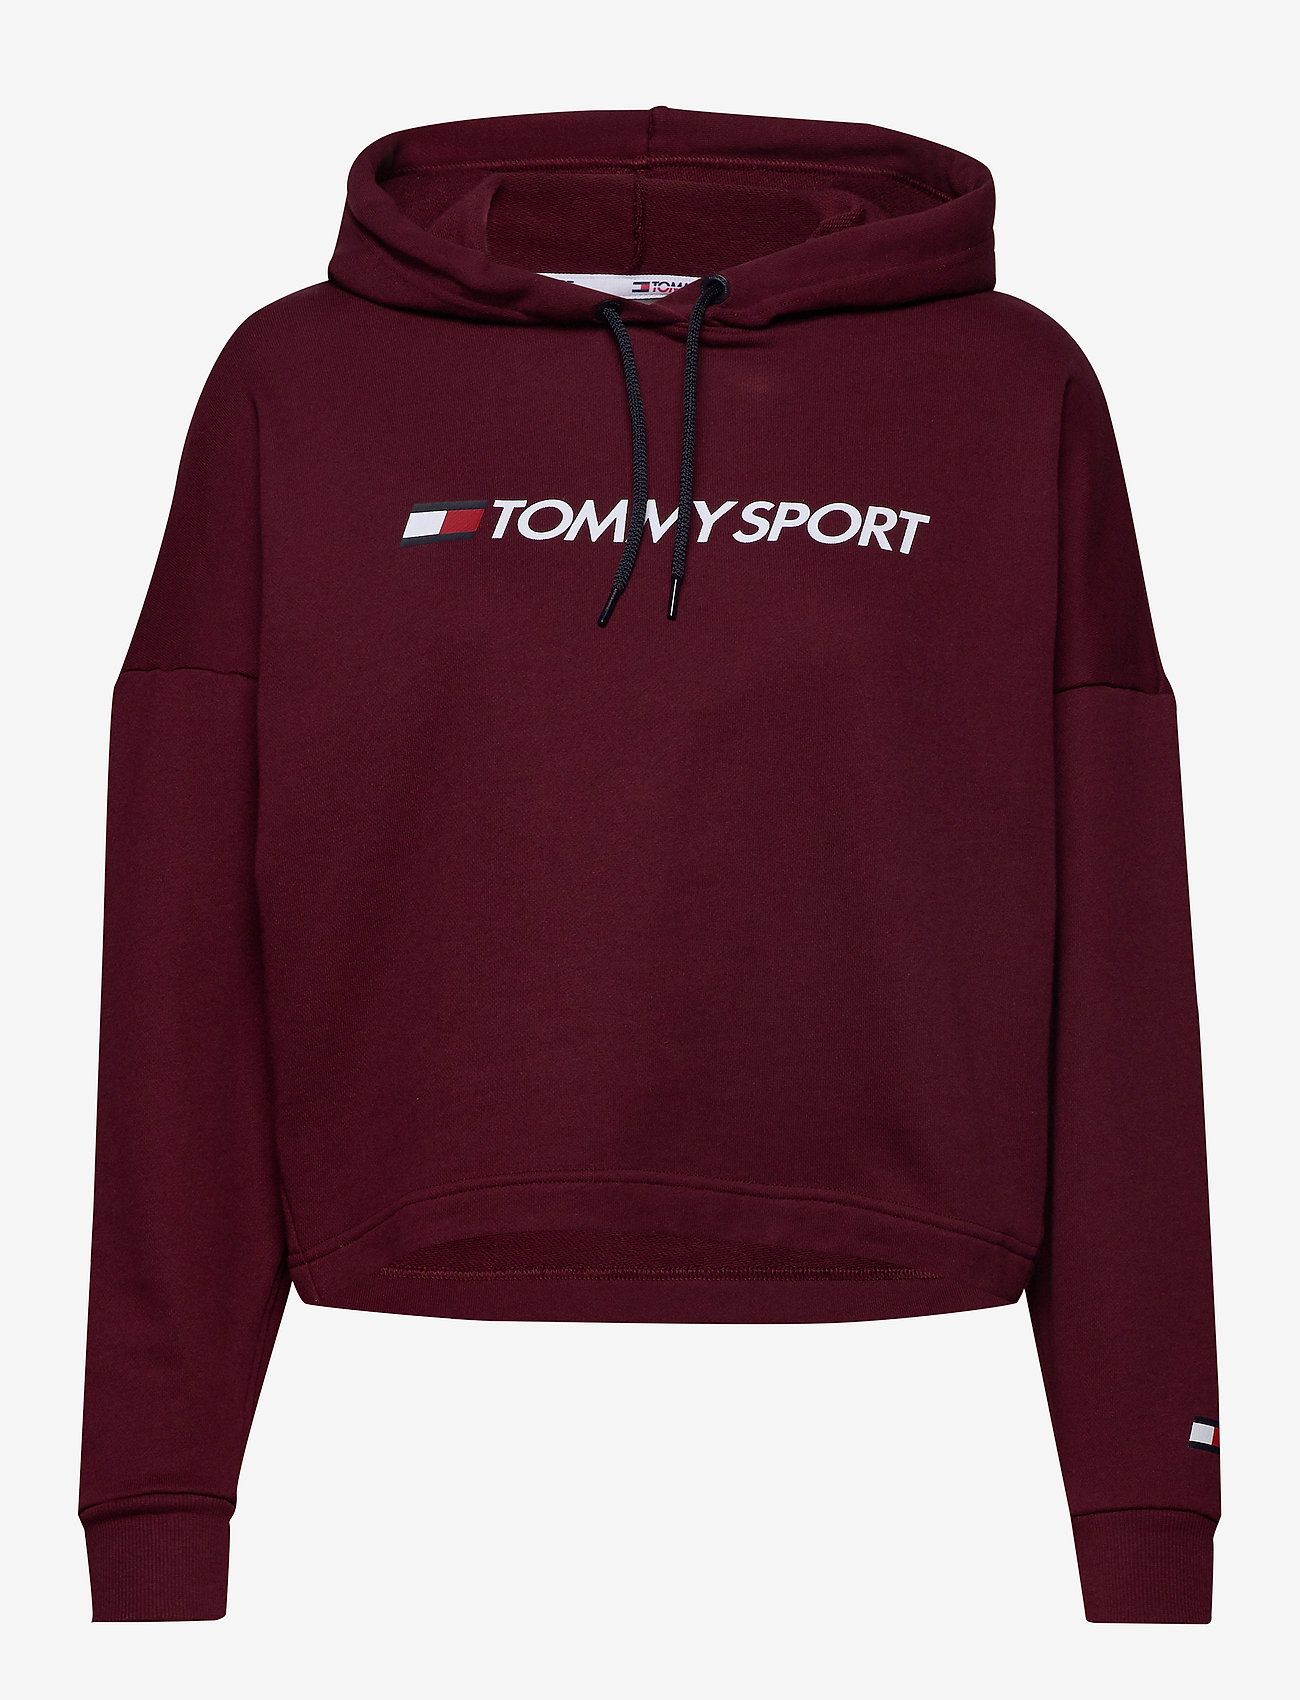 tommy sport sweater